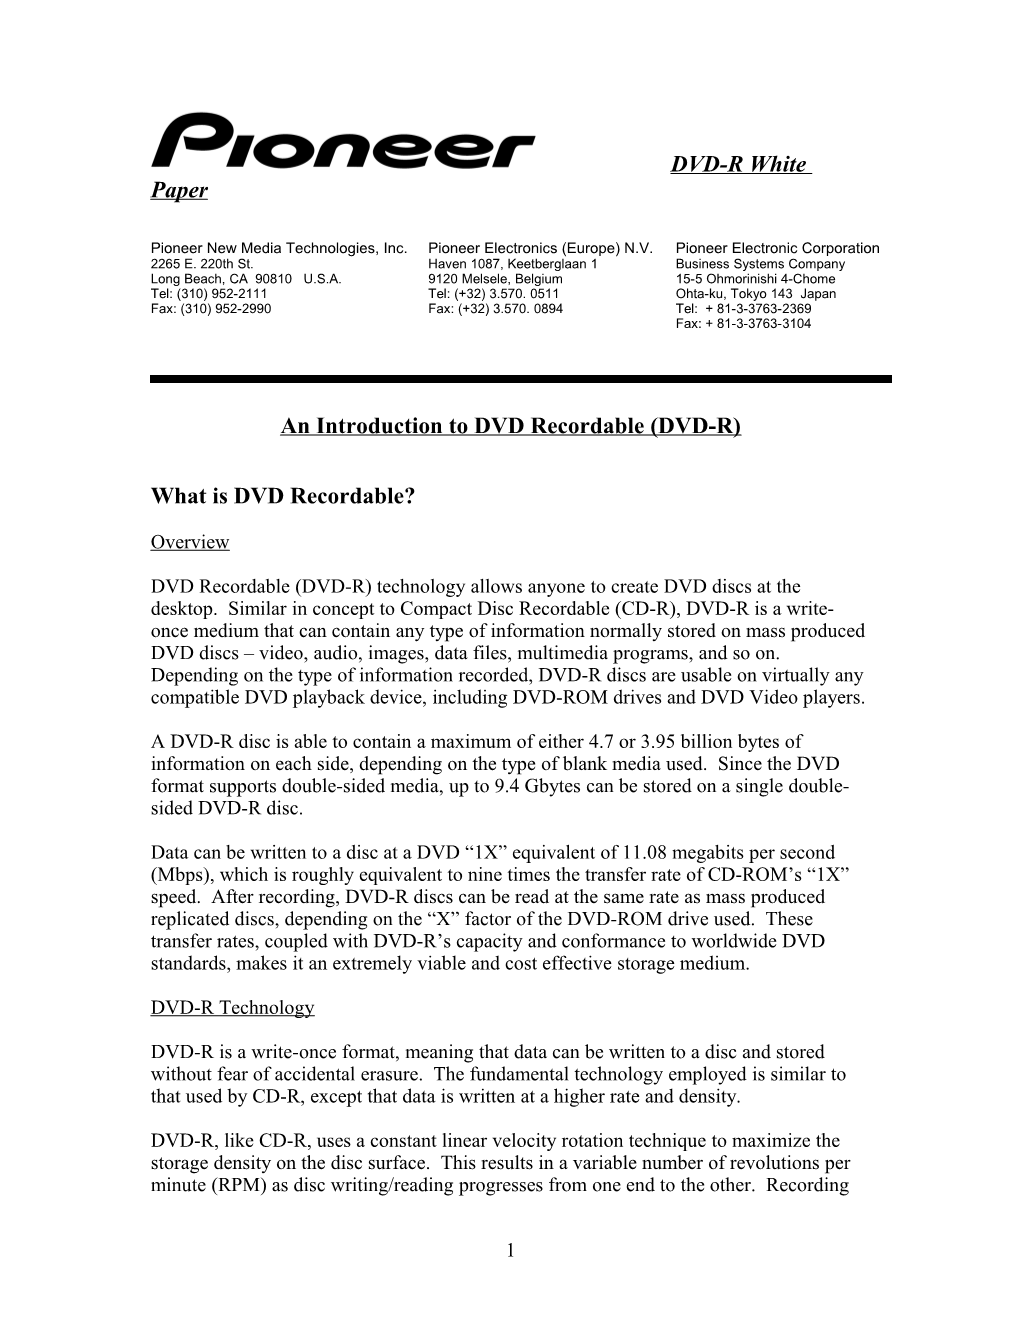 Pioneer New Media Technologies, Inc. Pioneer Electronics (Europe) N.V. Pioneer Electronic